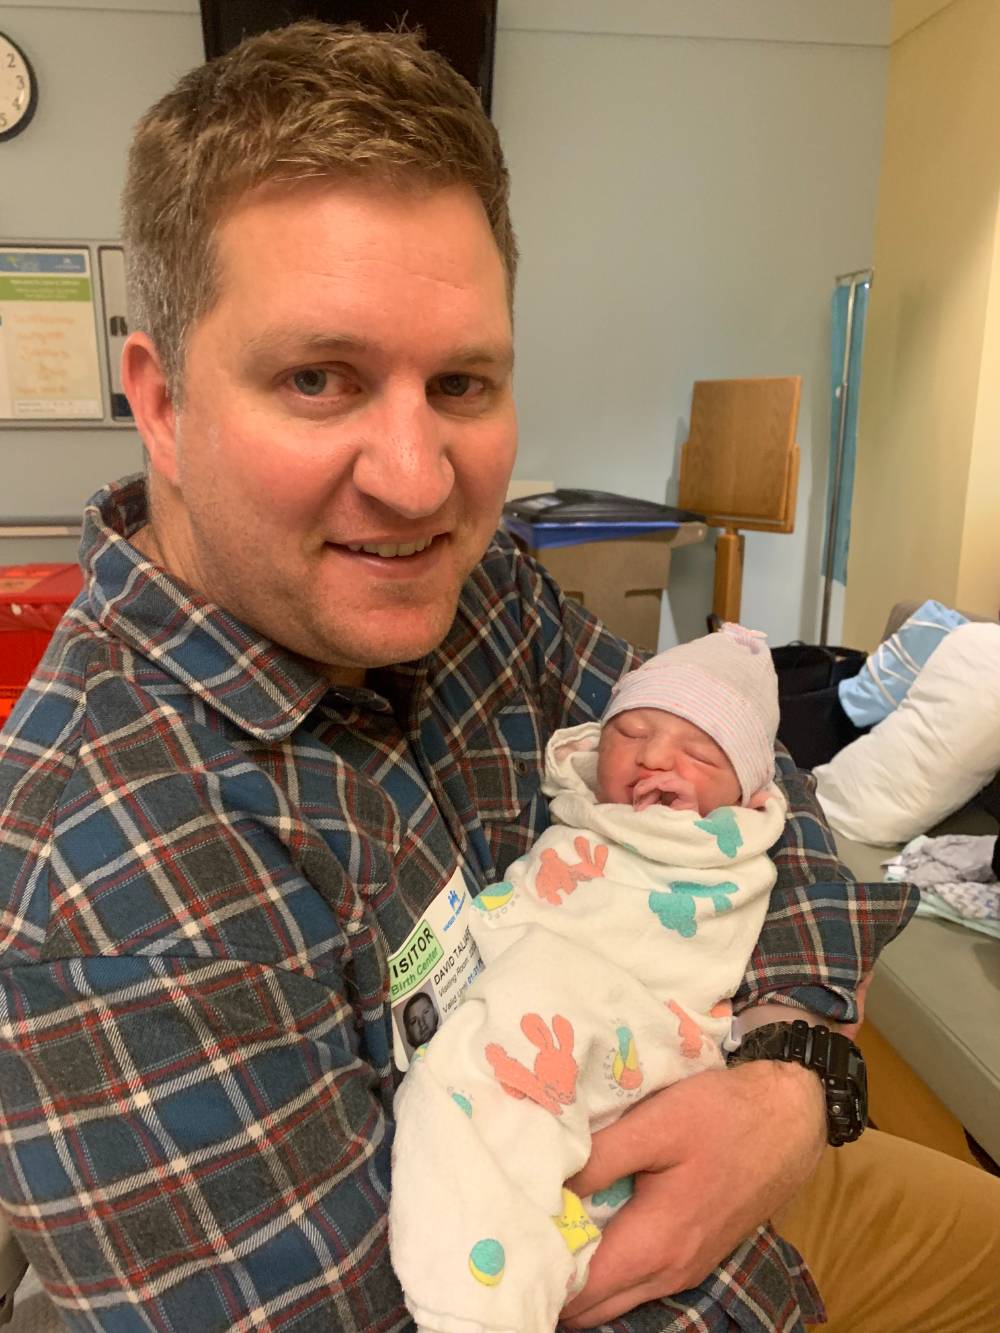 David Taliaferro with his son, baby Wyatt